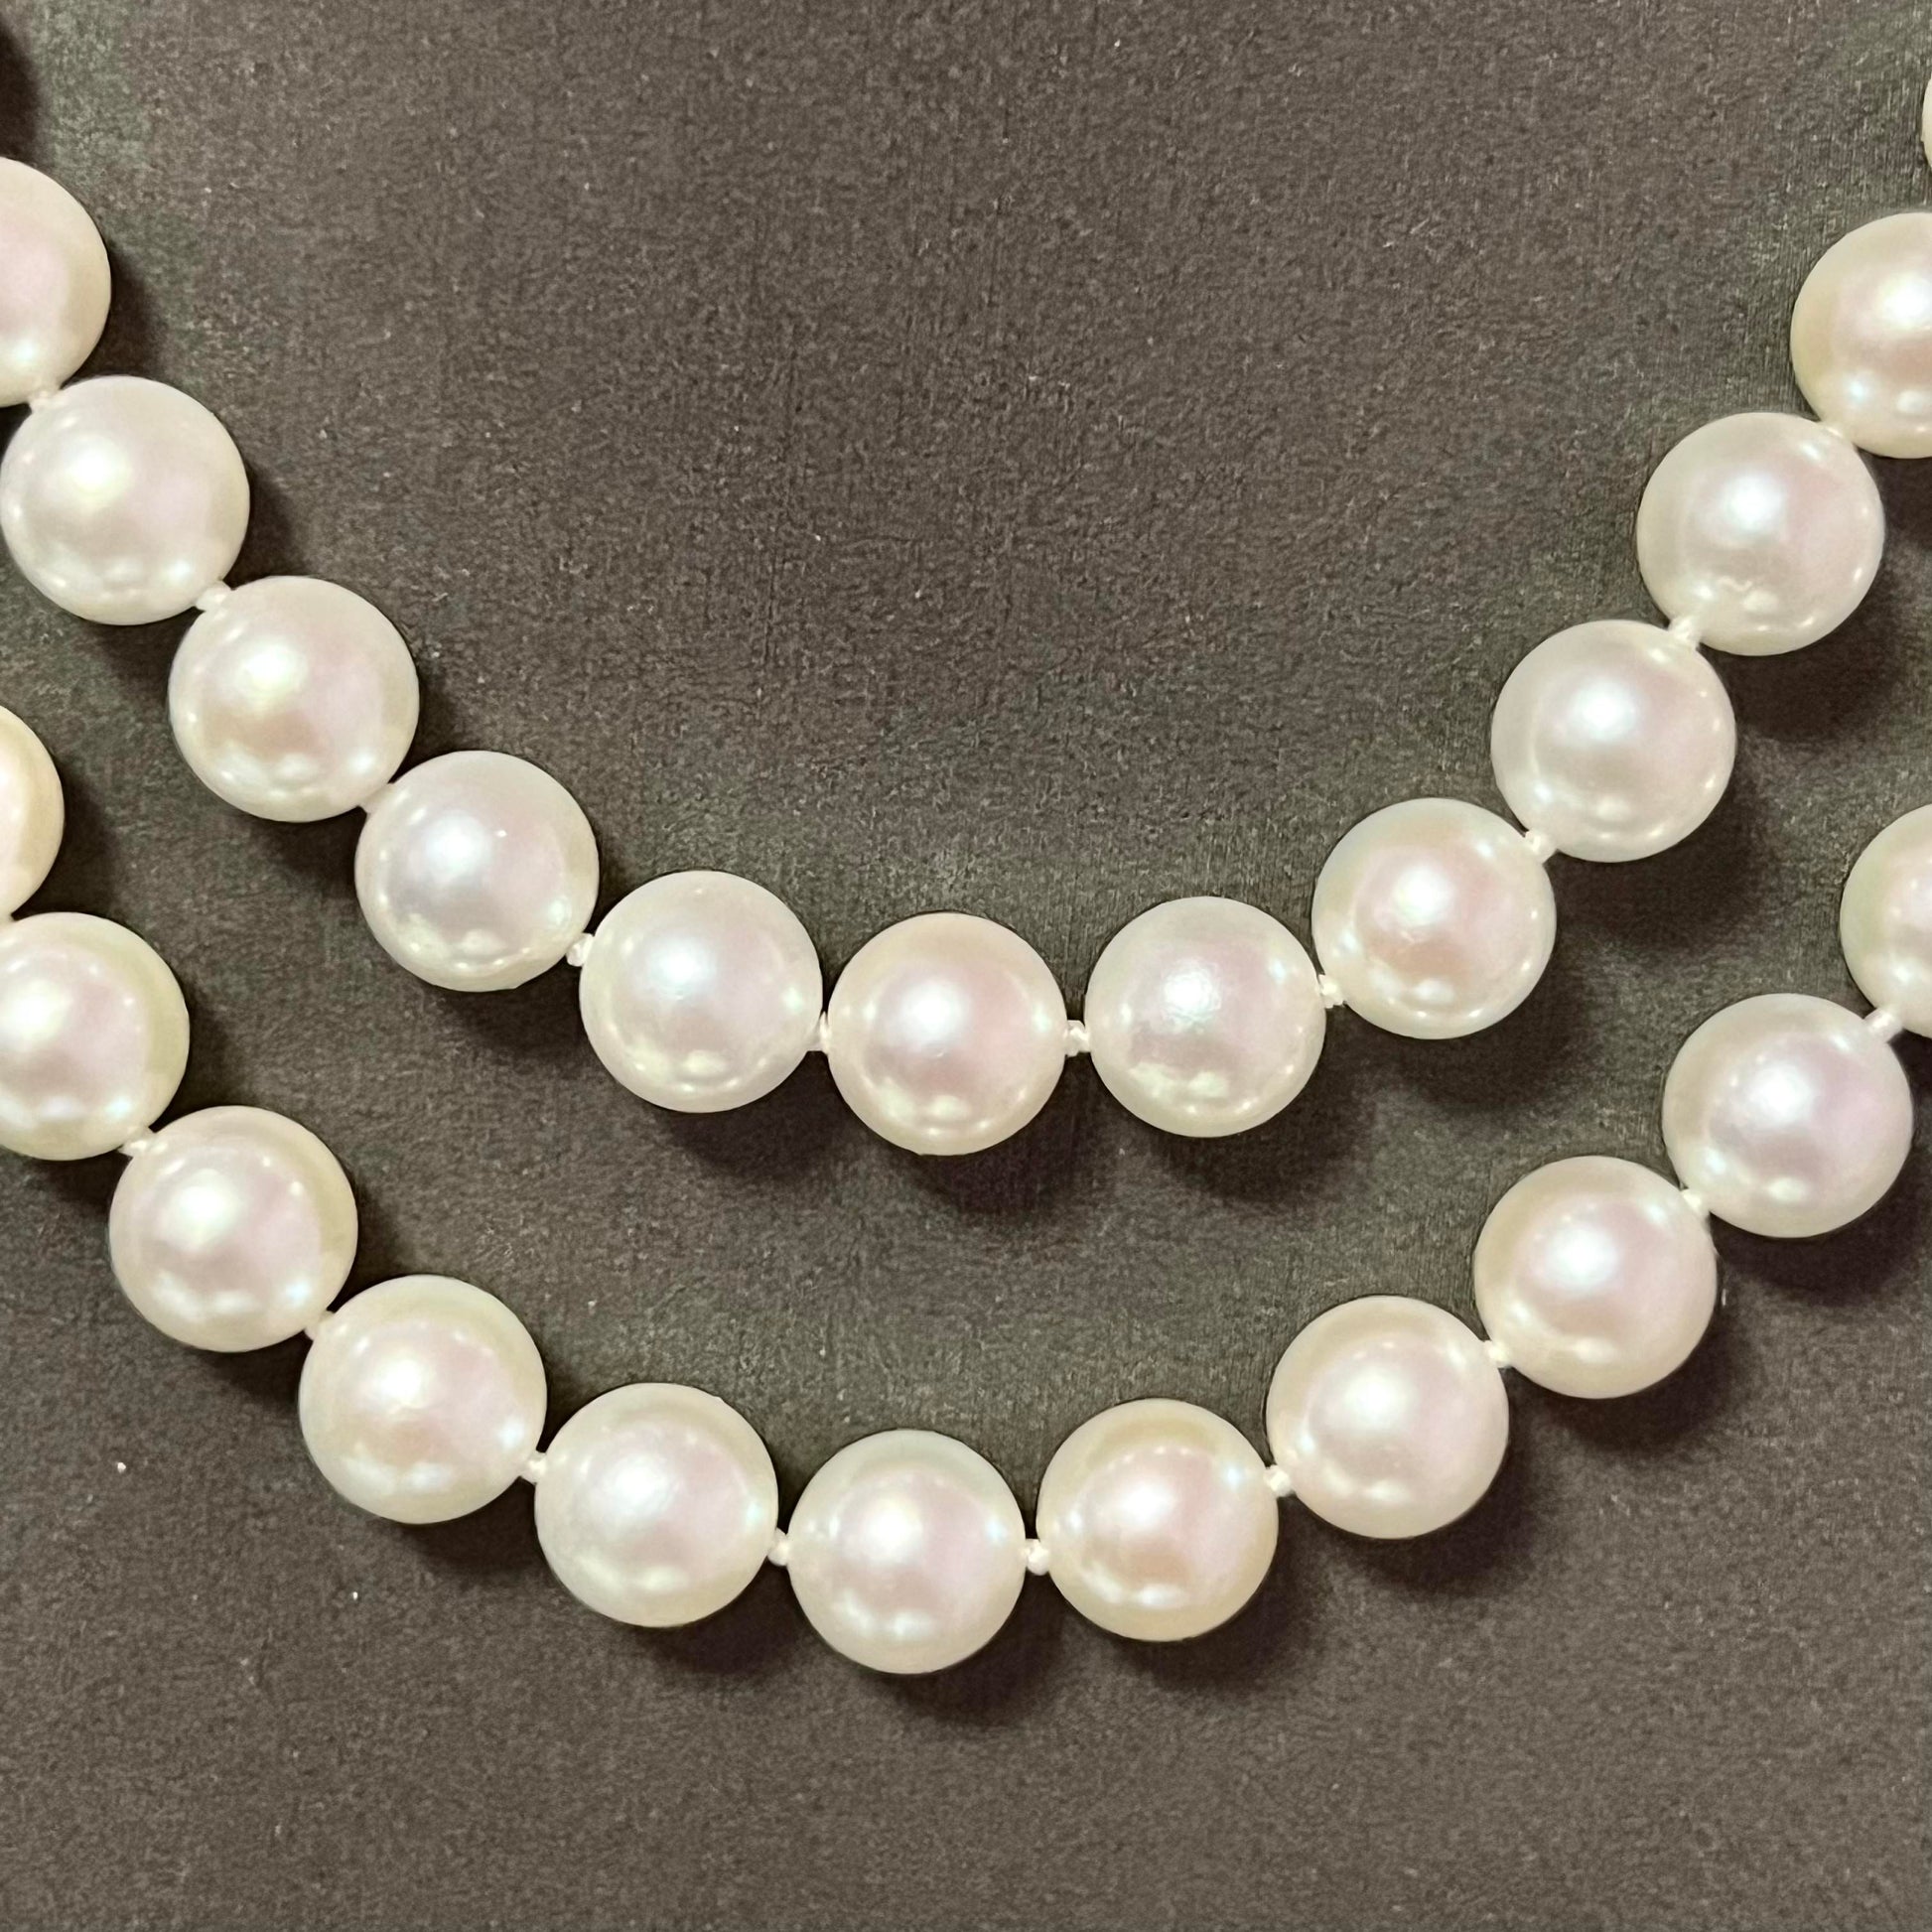 Tiffany & Co Estate Akoya Pearl Necklace 34" 18k White Gold Certified $39,850 308491 - Certified Fine Jewelry